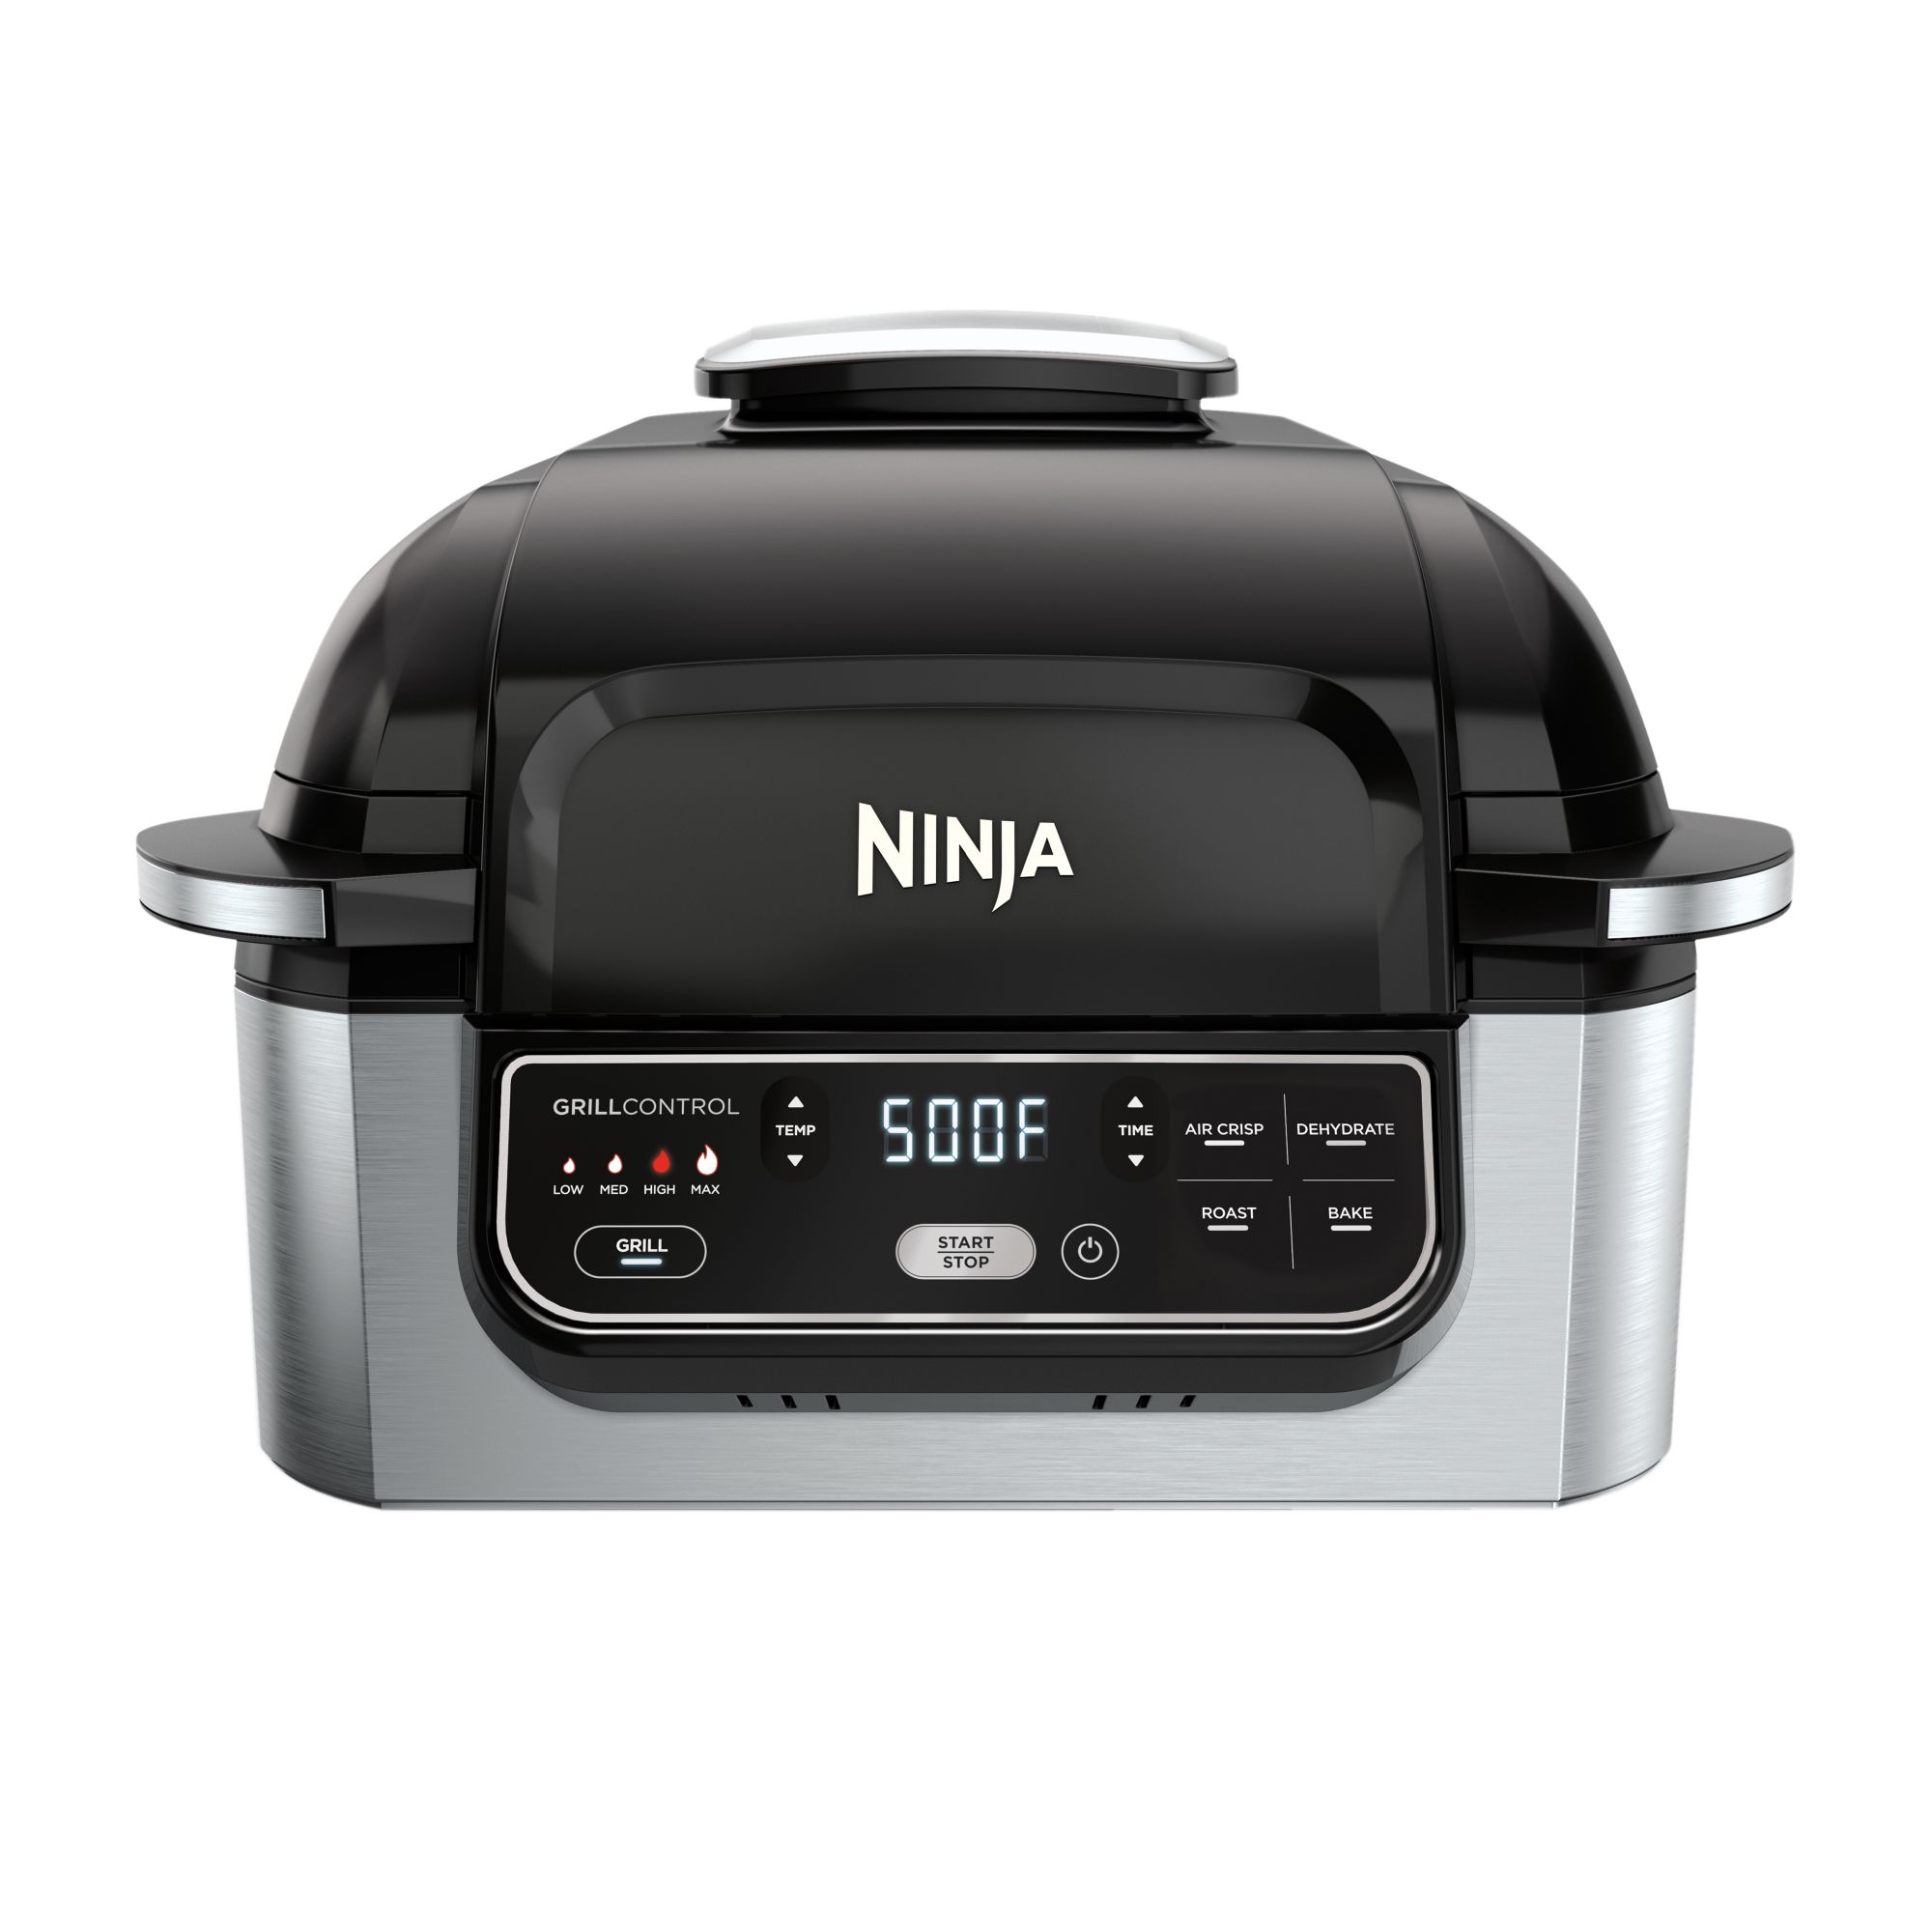 Ninja FG551 foodi smart xl 6-in-1 indoor grill with 4-quart air fryer roast  bake